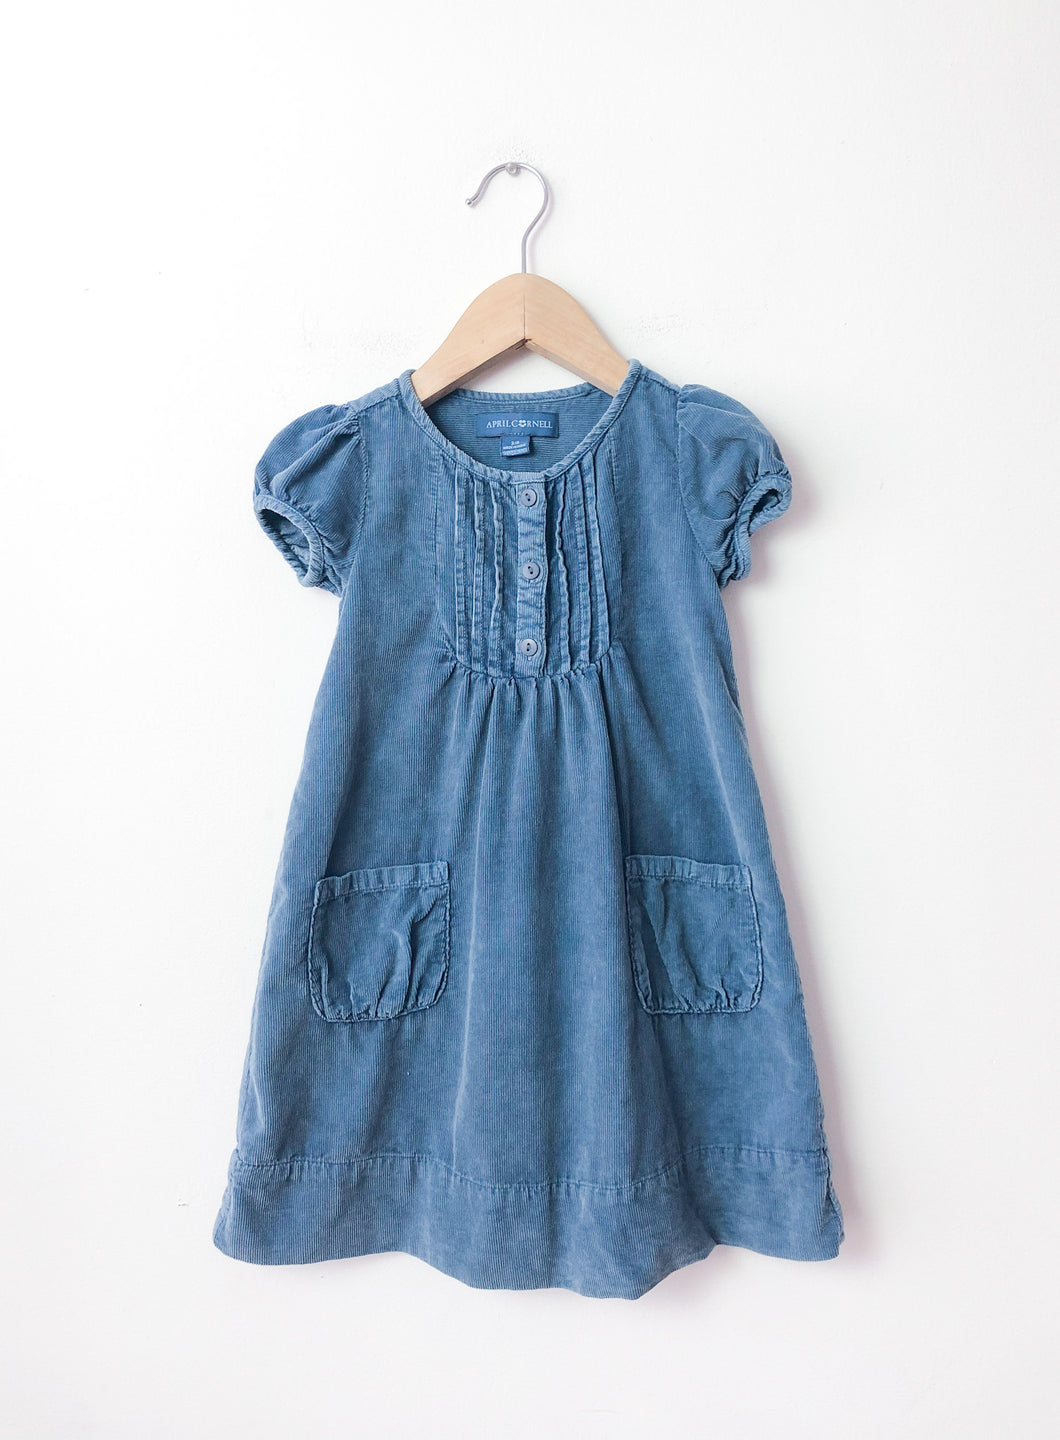 Blue April Cornell Dress Size 3/4